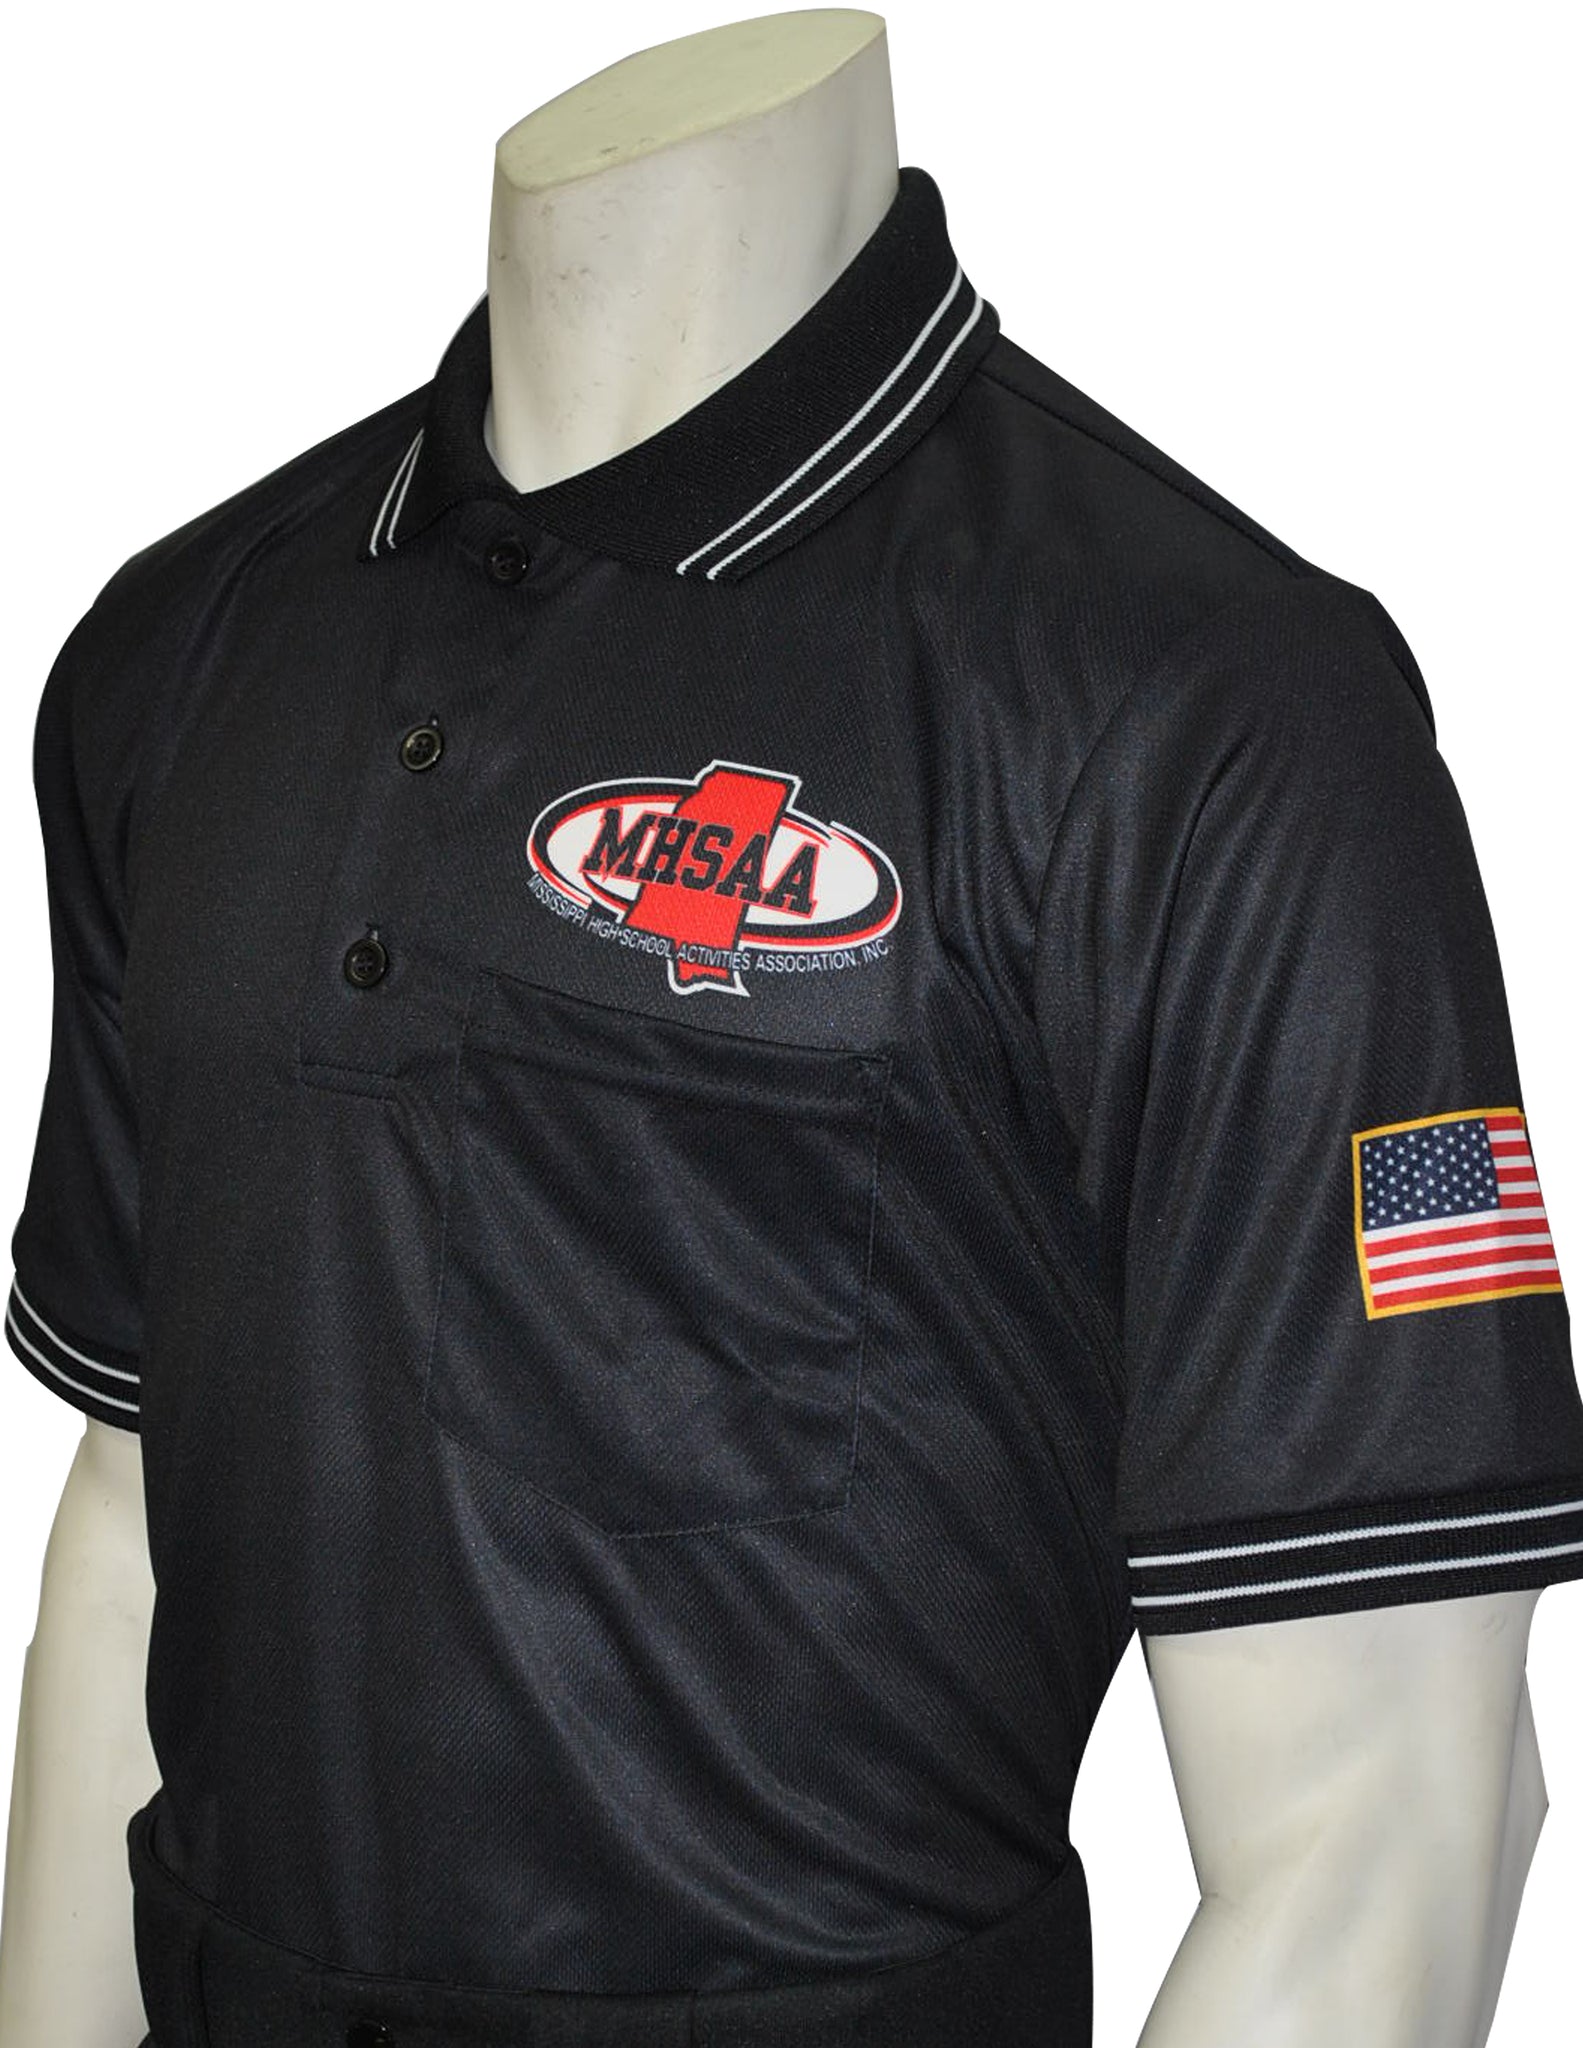 USA300MS - Smitty "Made in USA" - Mississippi Baseball Short Sleeve Shirt Black